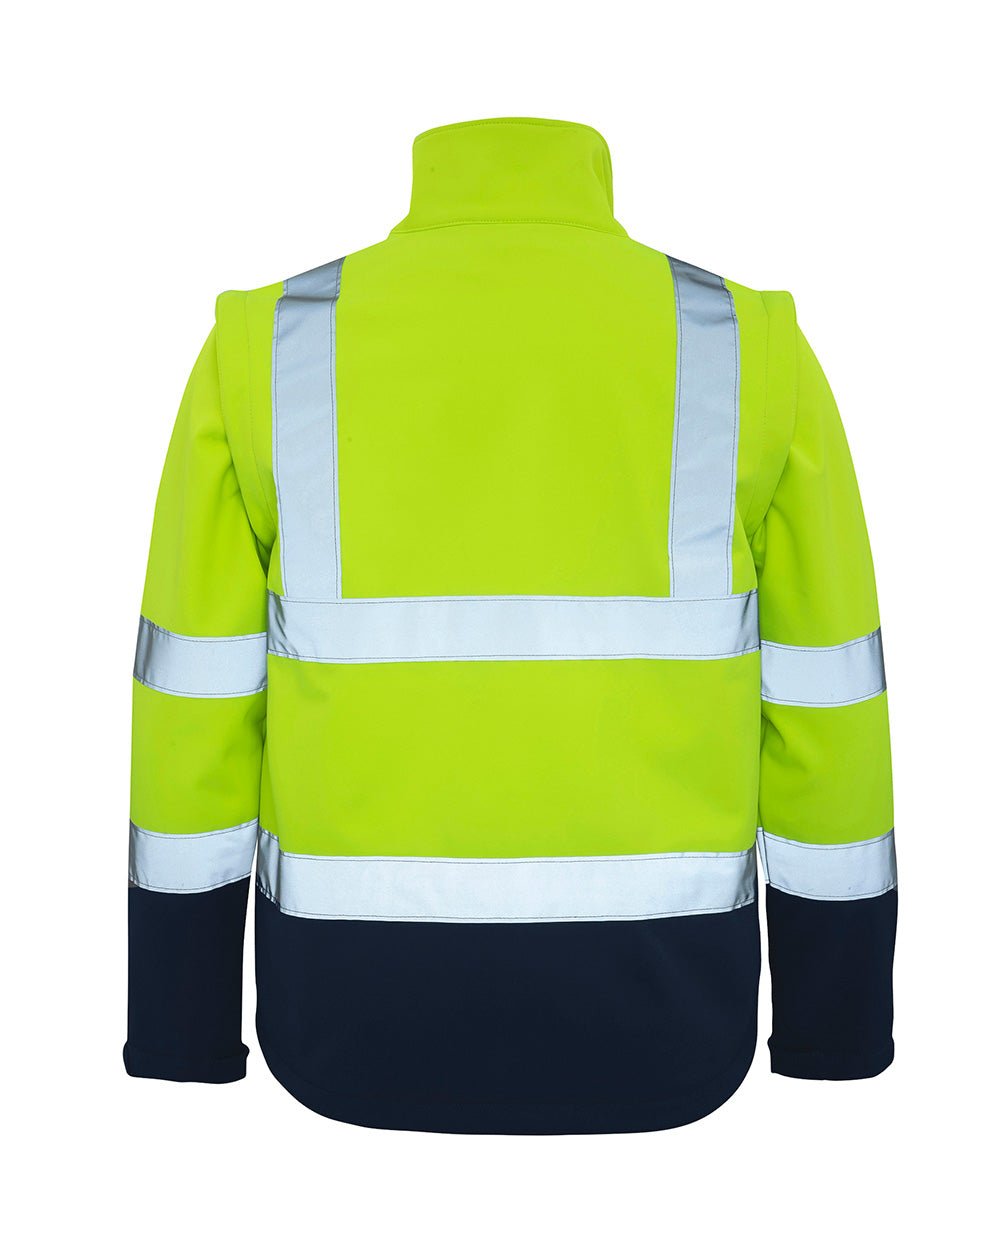 Landy Softshell Jacket in Fluoro Yellow & Navy